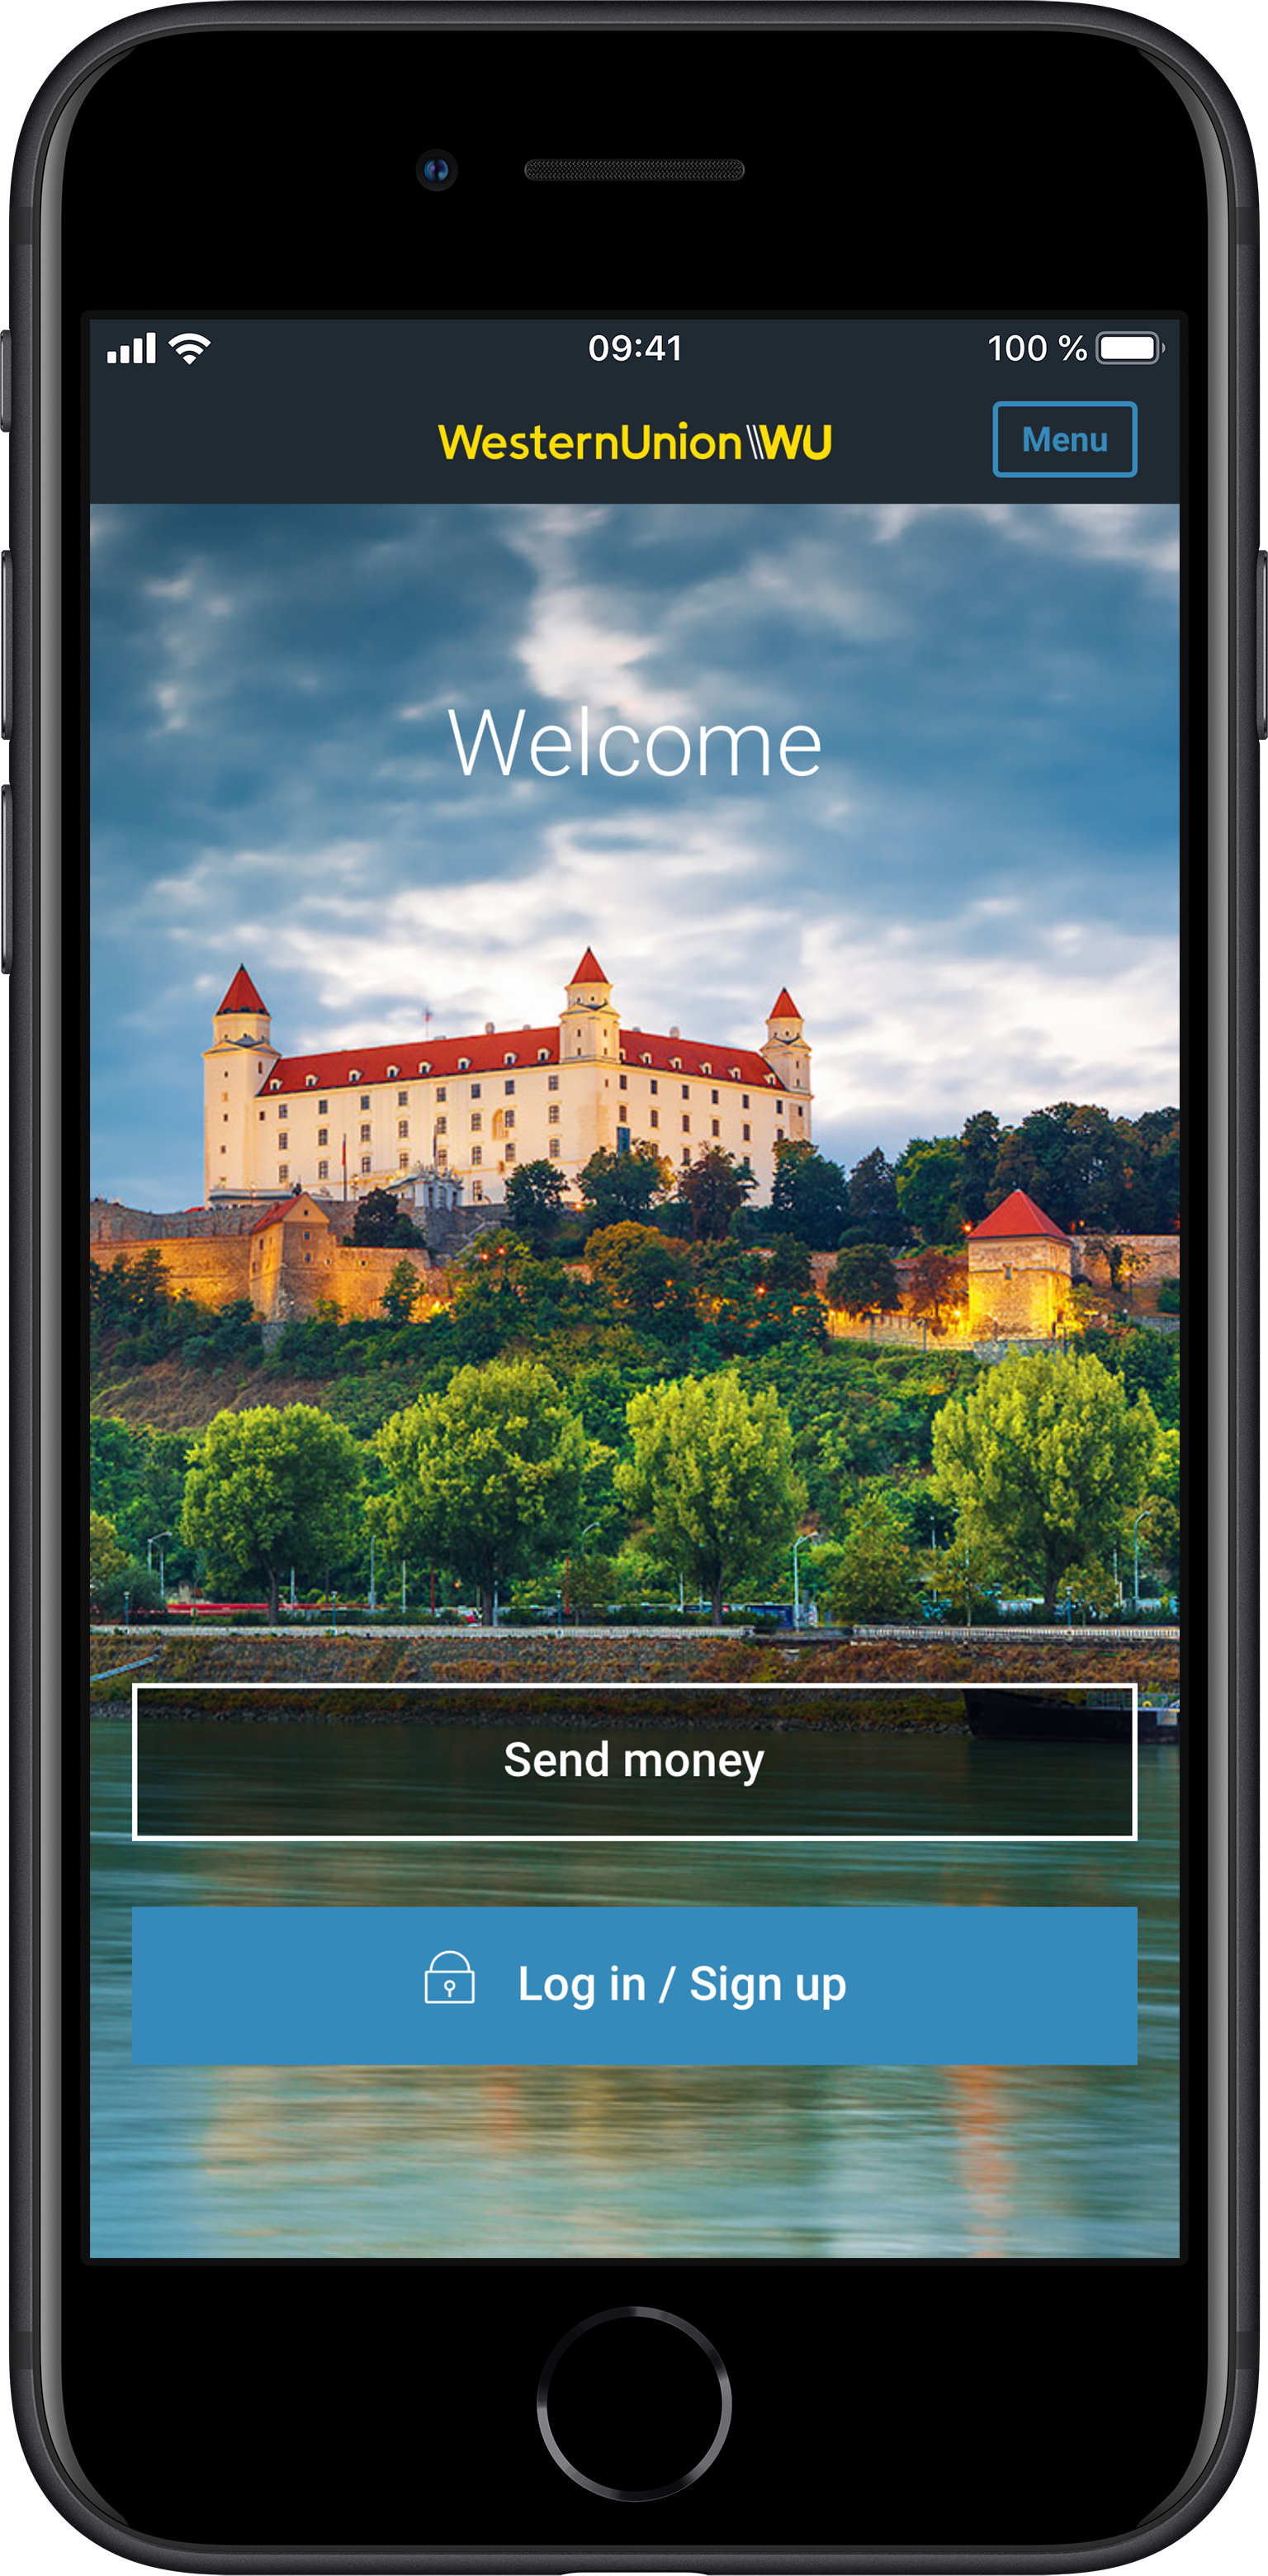 Application screen - send money